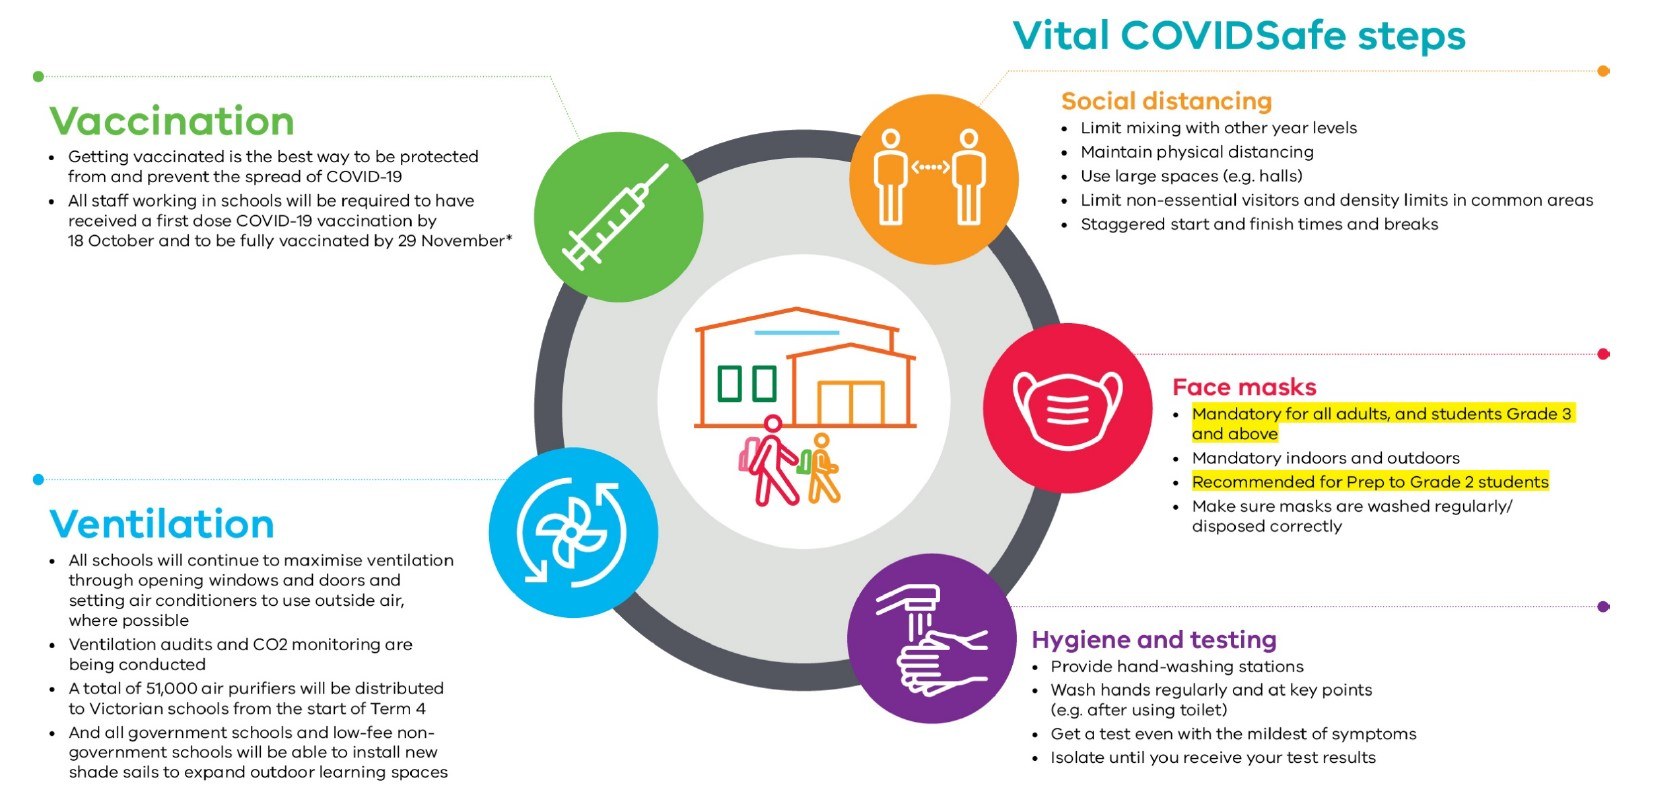 Three Vs: Ventilation, Vaccination and Vital COVIDSafe Steps